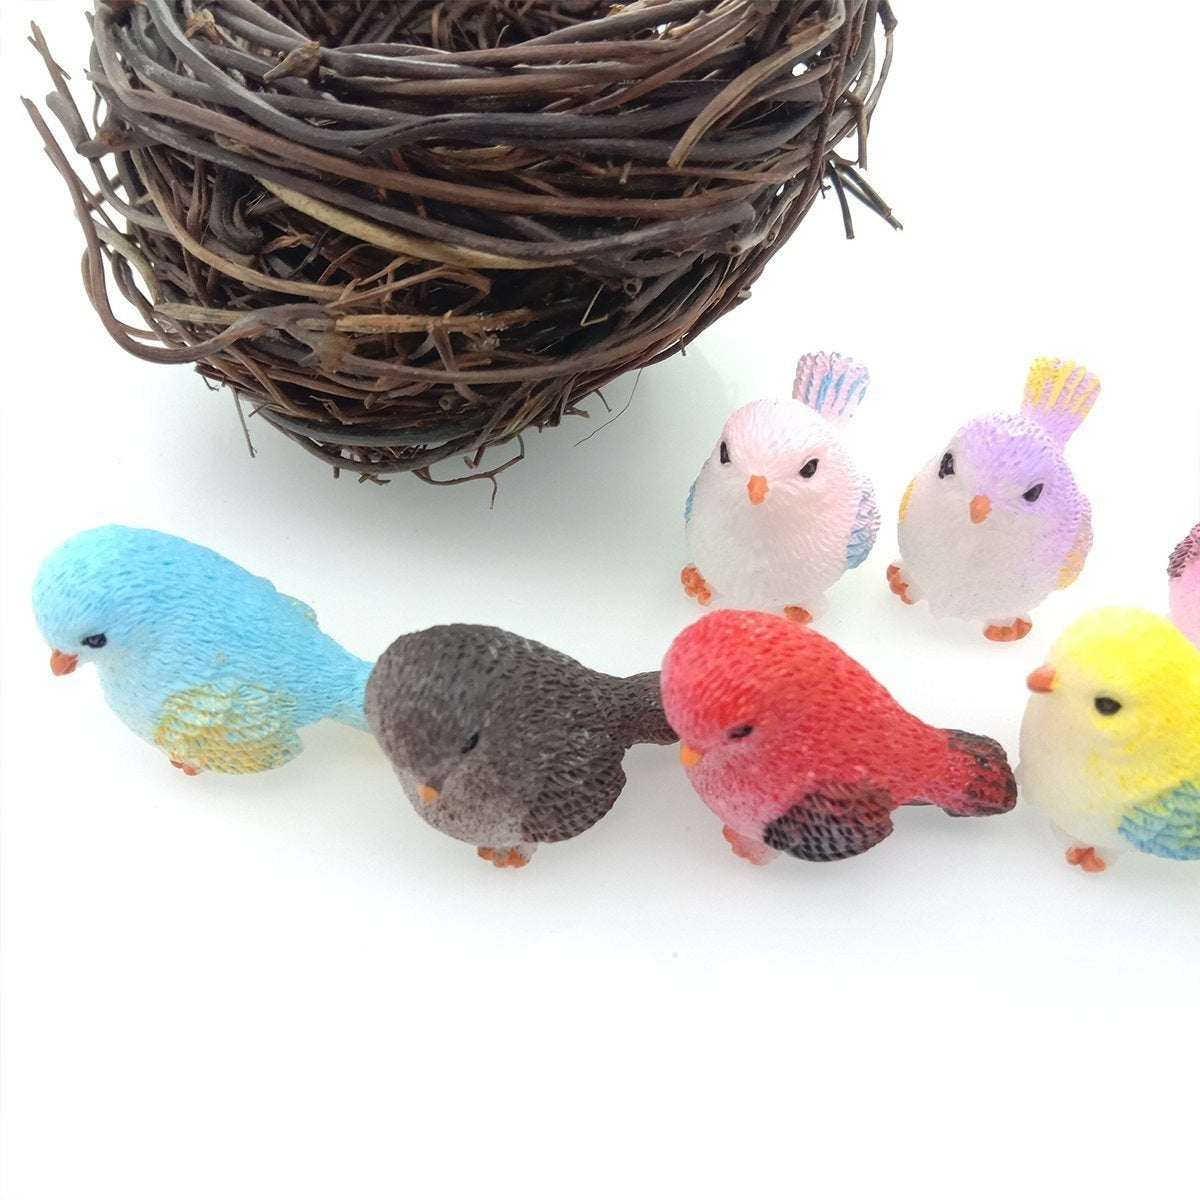 8 Birds In A Nest Resin Parrot Bird Figurine Animal Model Home Decorations Miniature Fairy Garden